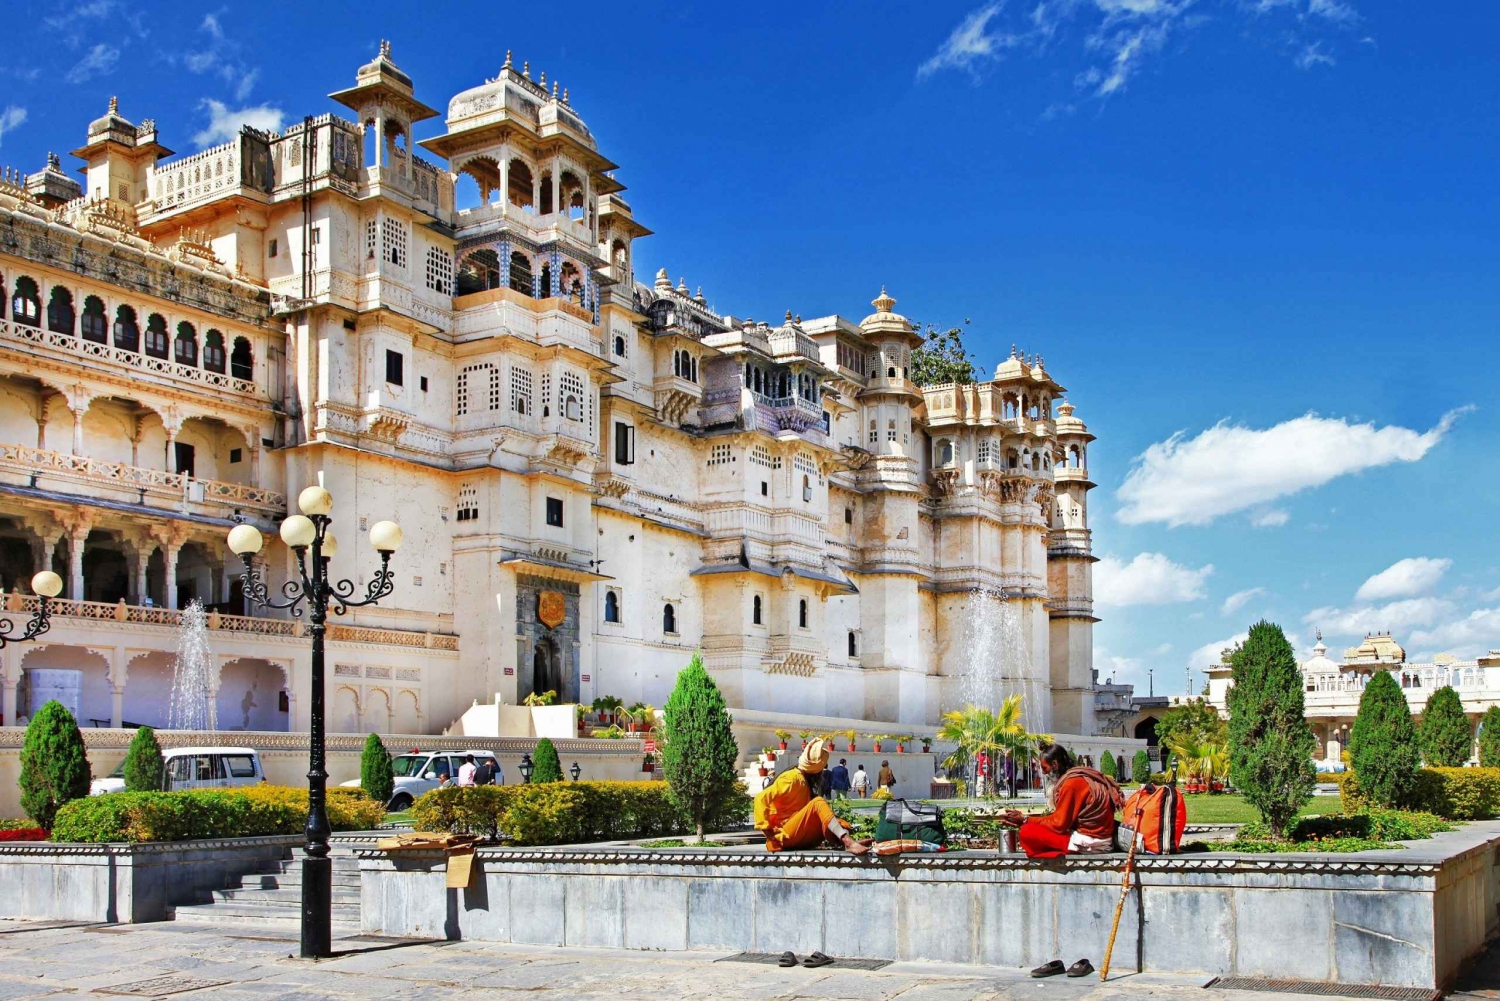 8-dages tur til Udaipur, Jodhpur og Jaisalmer.